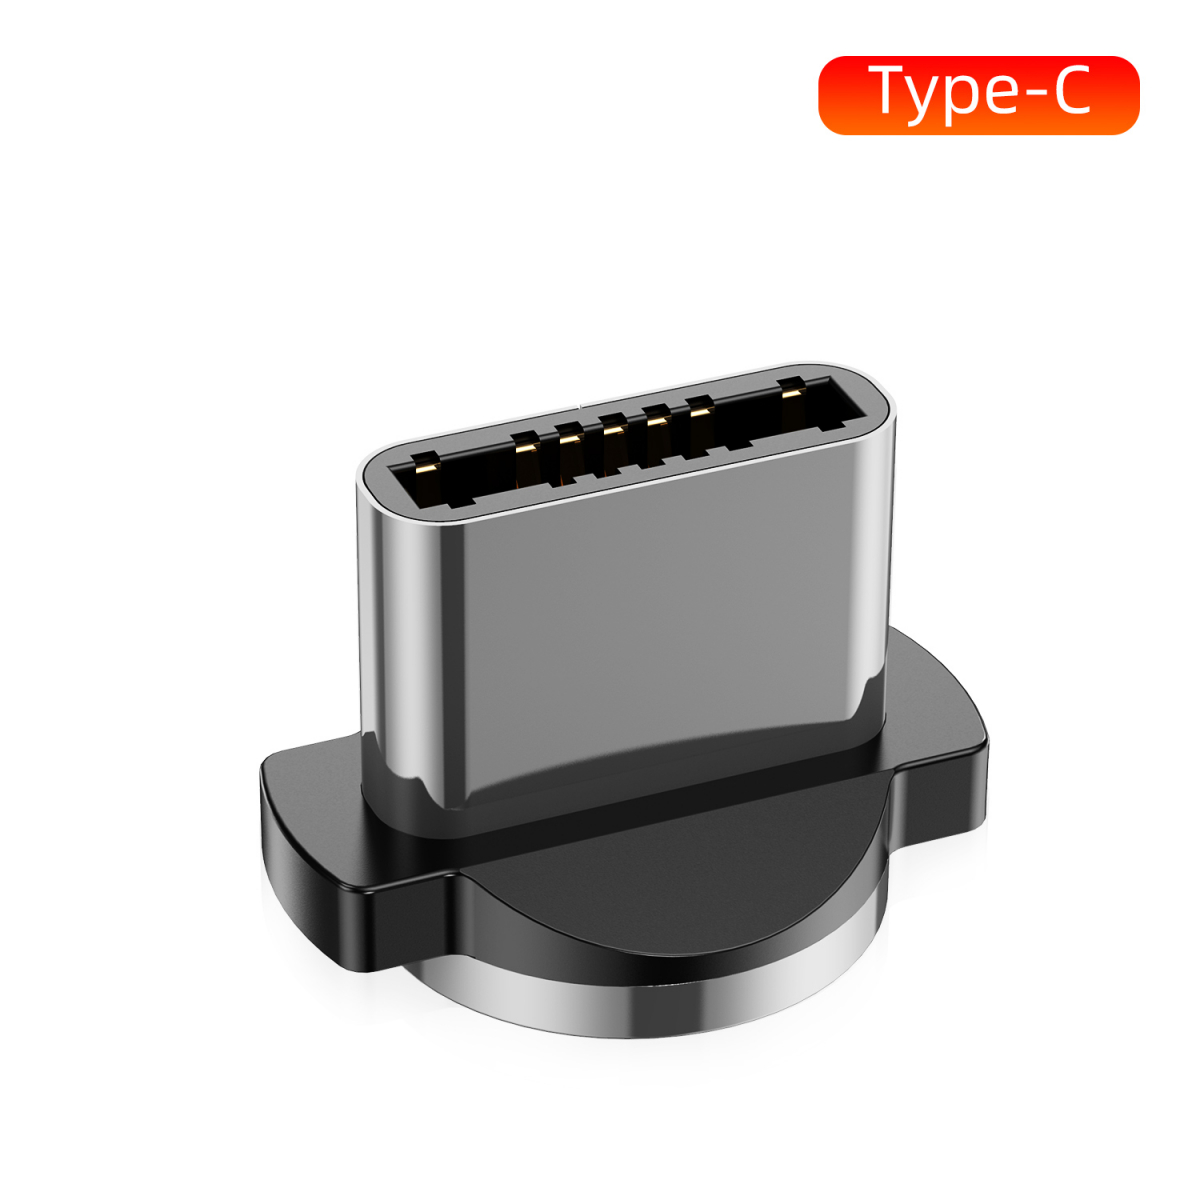 CaseMe Magnetisk kabel, MicroUSB+Lightning+USB-C, 2.4A, svart